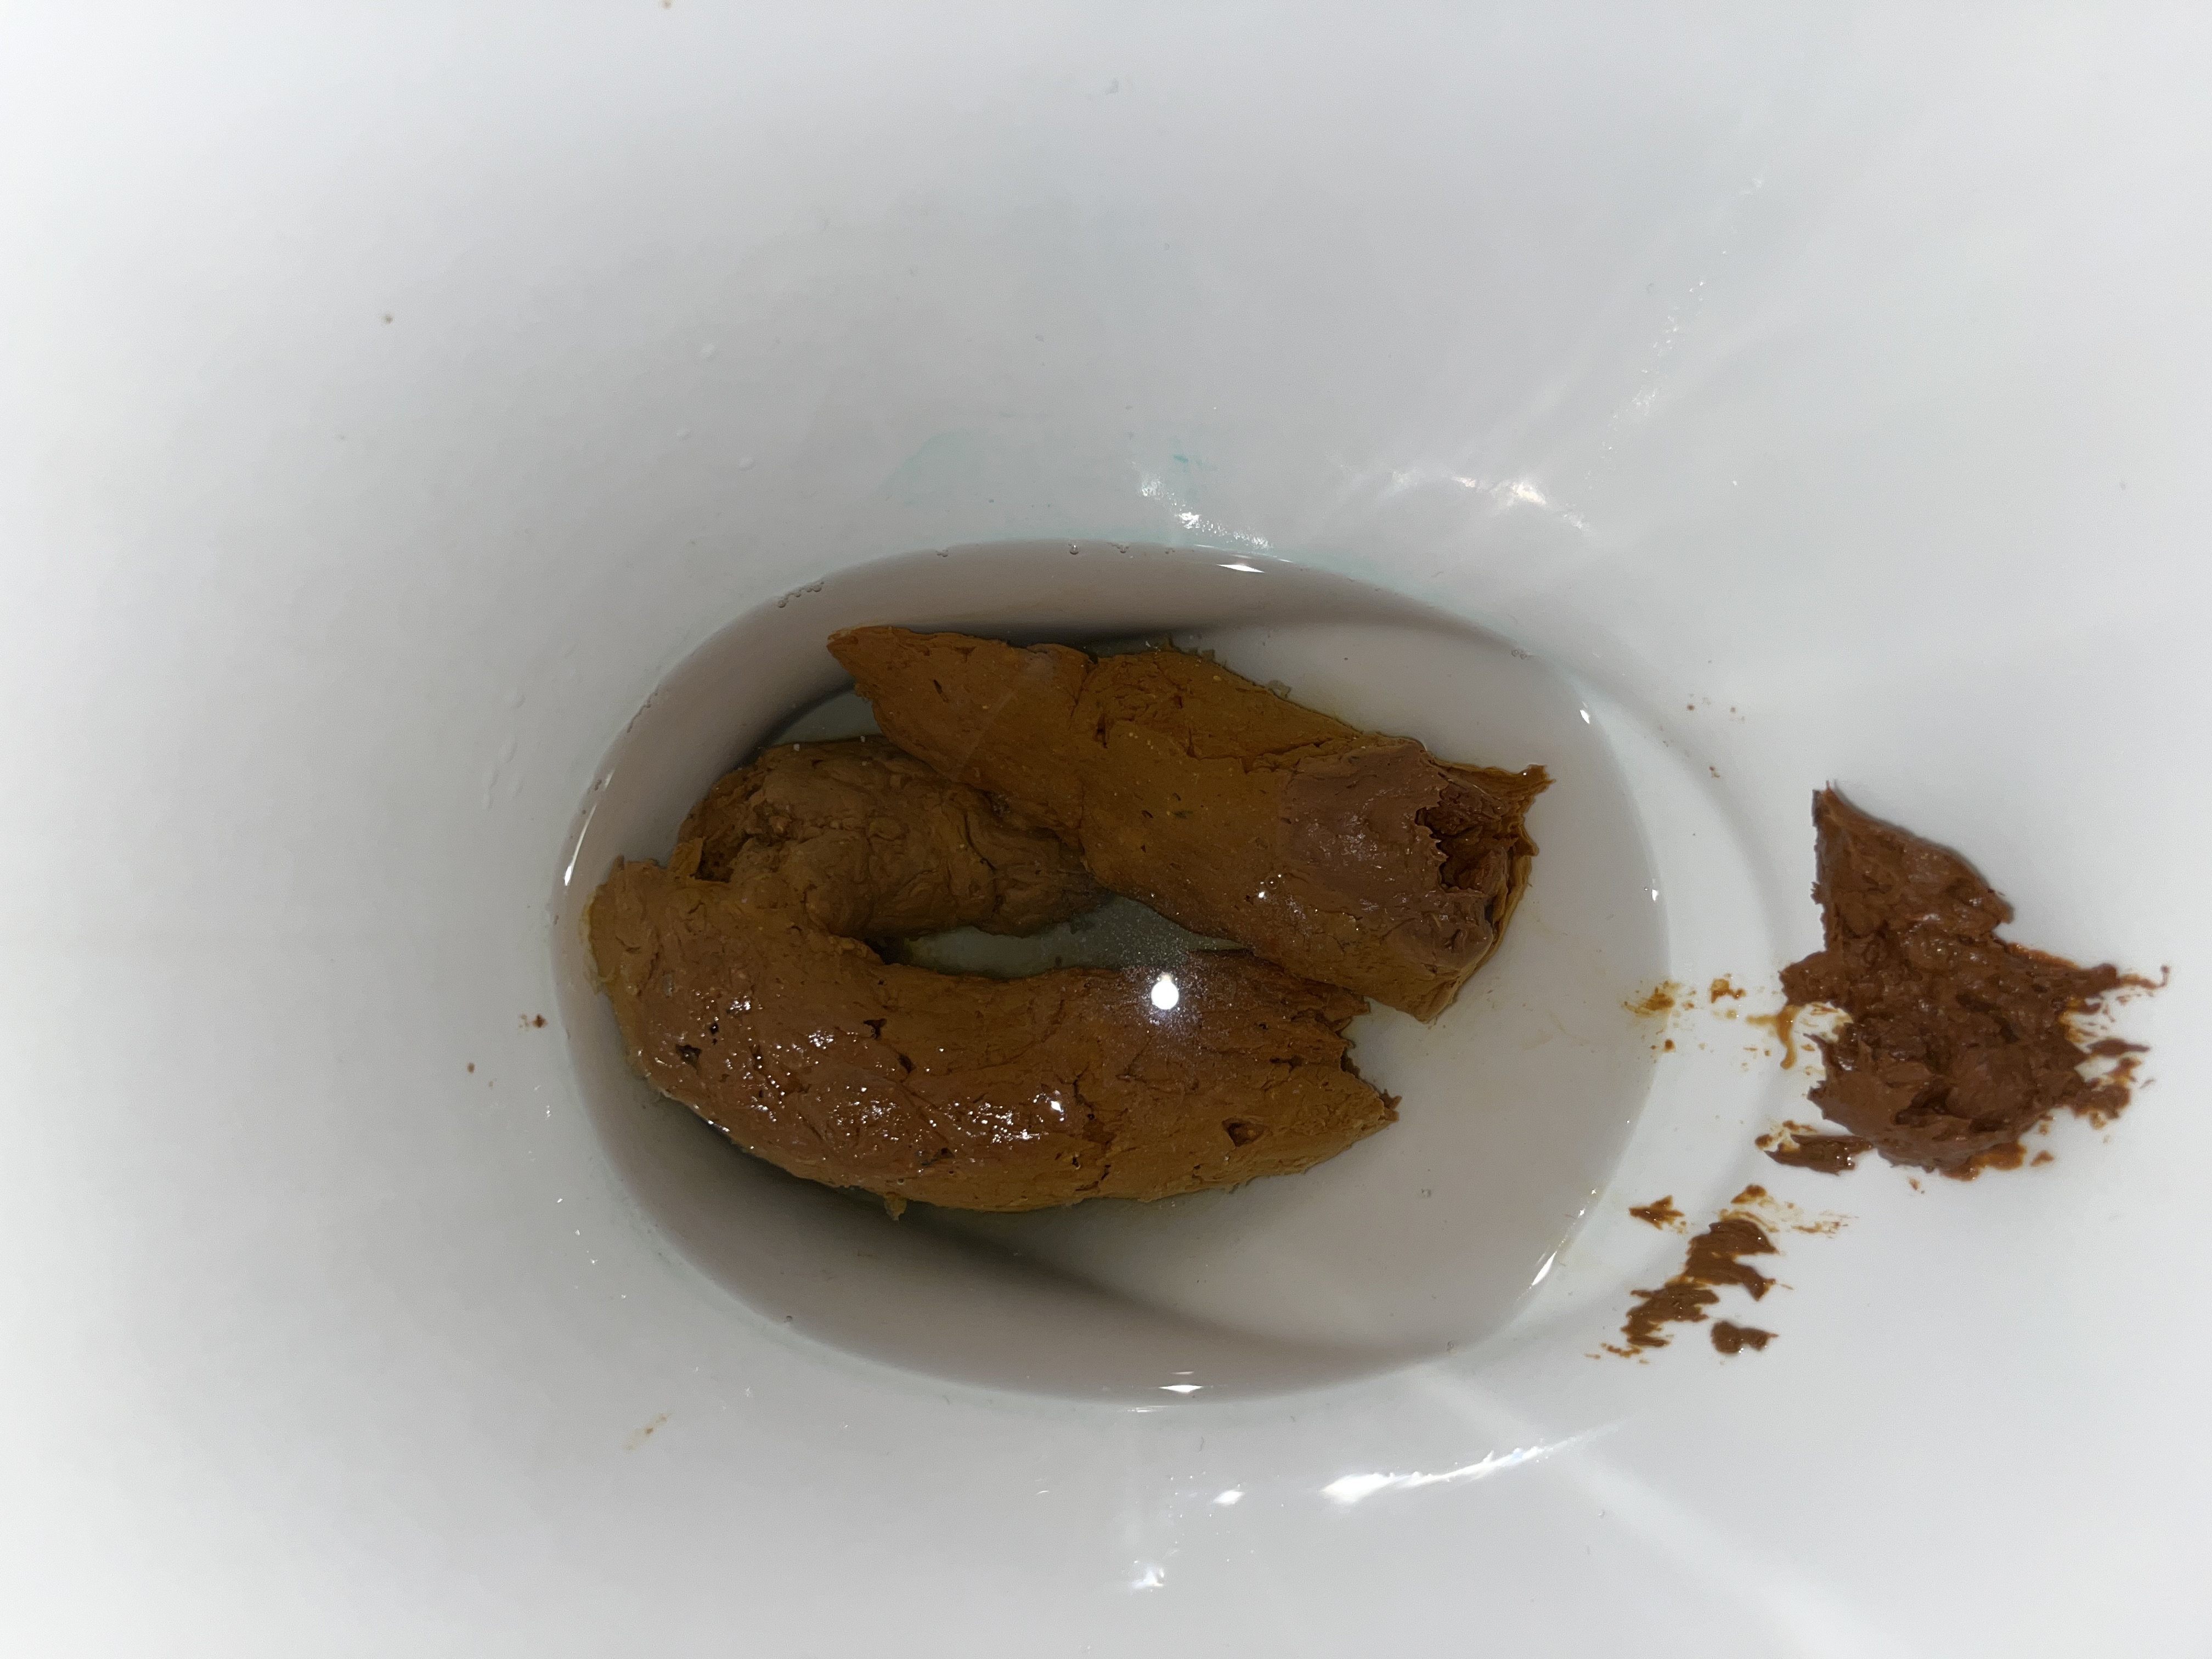 Twink shitting on toilet